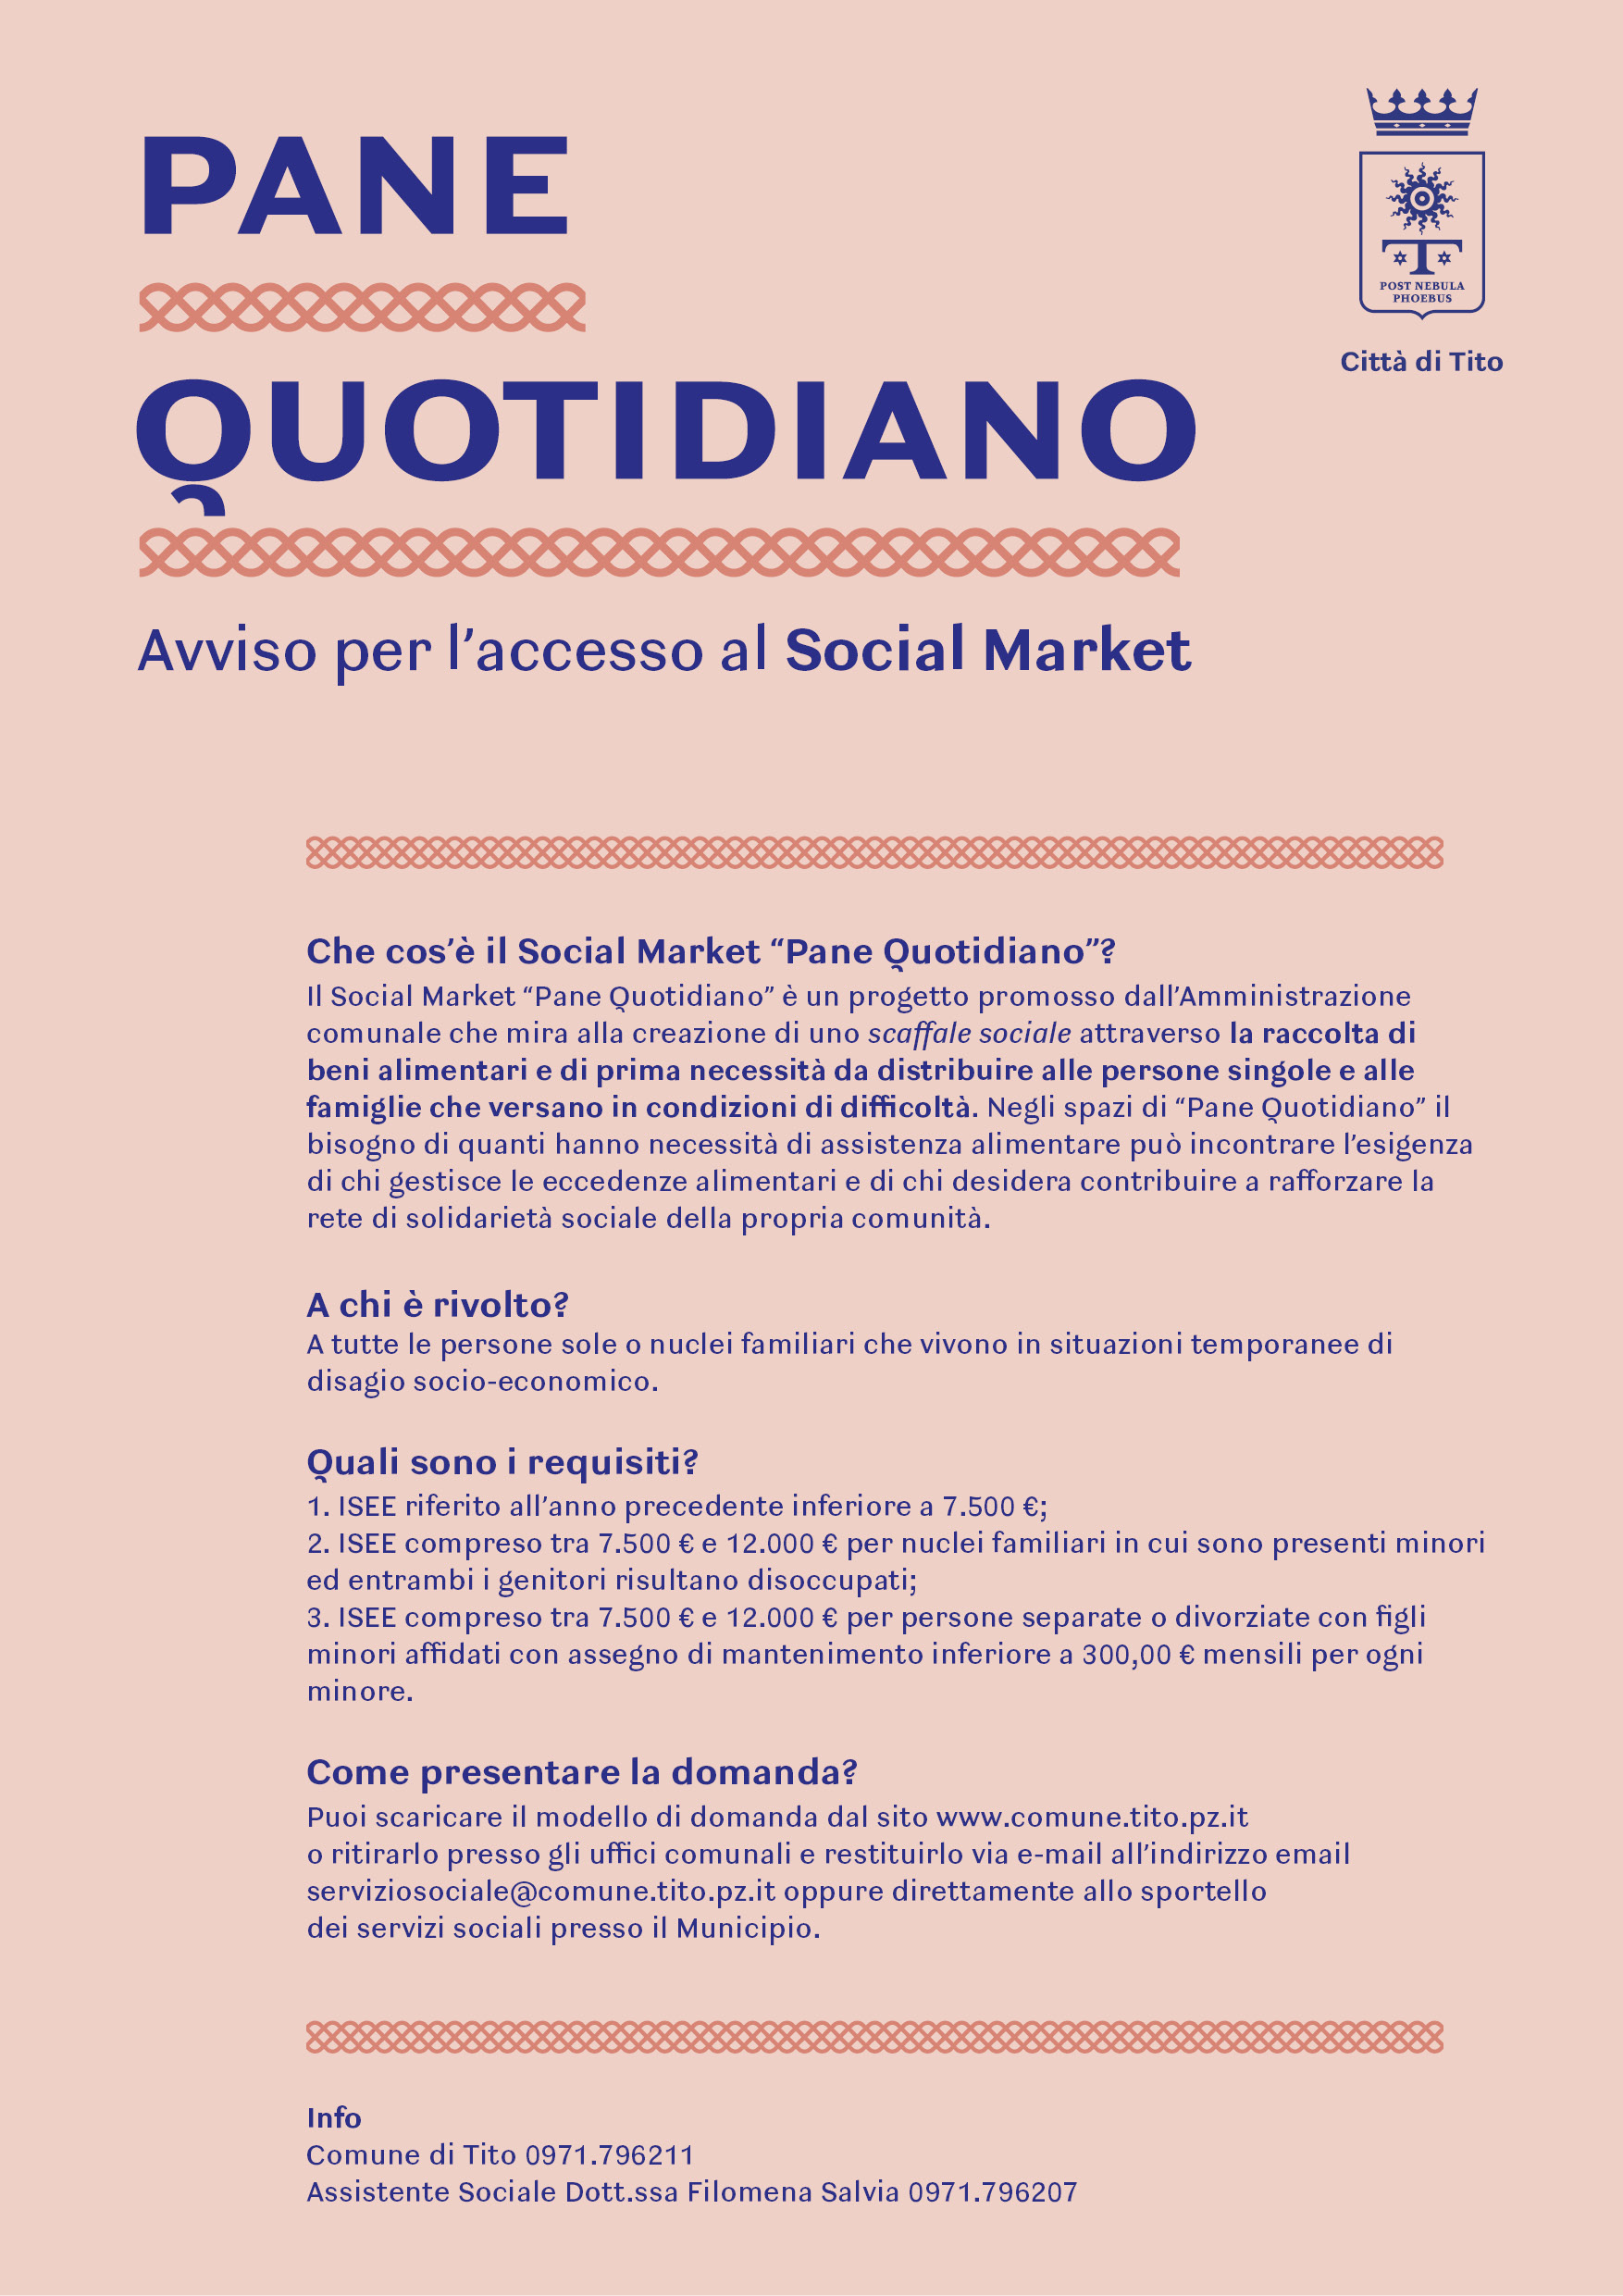 pane quotidiano social market w690